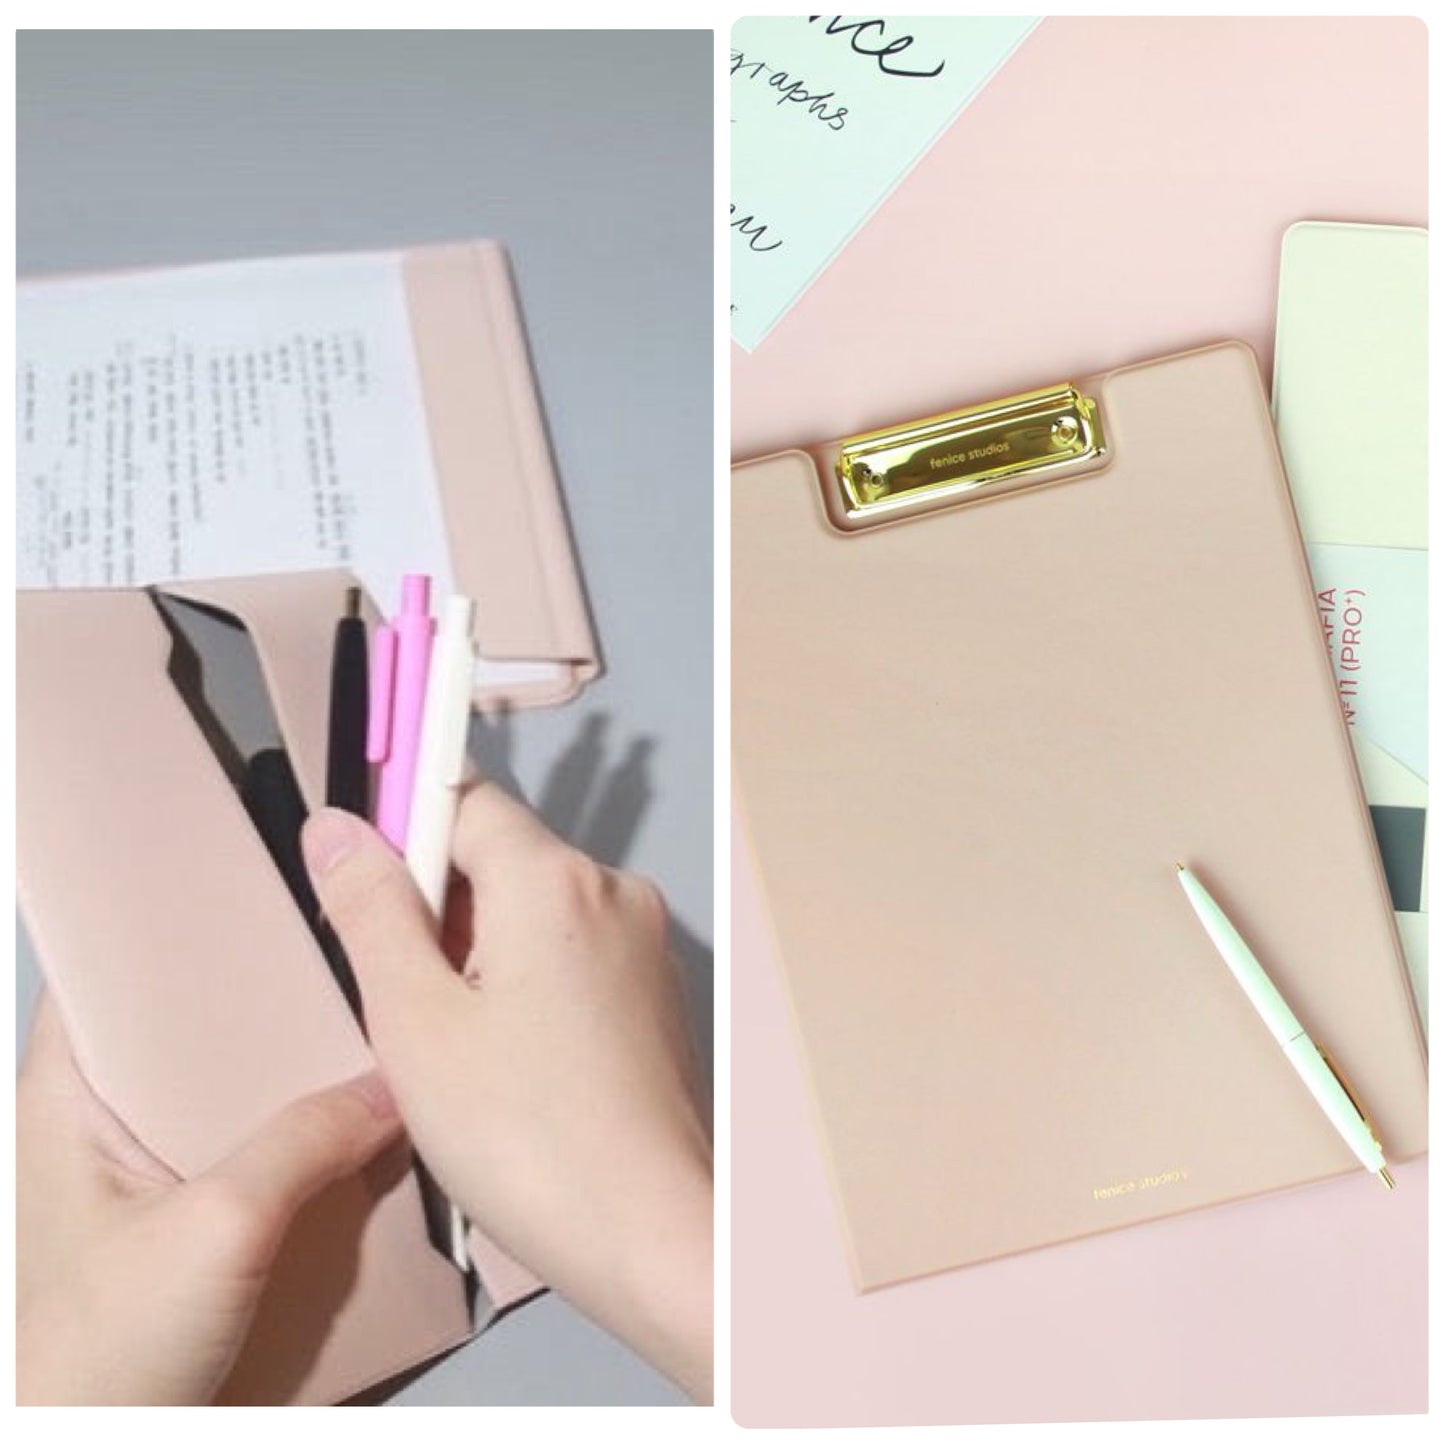 韓國Crafty in Office 皮革系列套裝 Duo (A4 Leather Clipboard Folder x Leather Pens Case)  (預購商品)